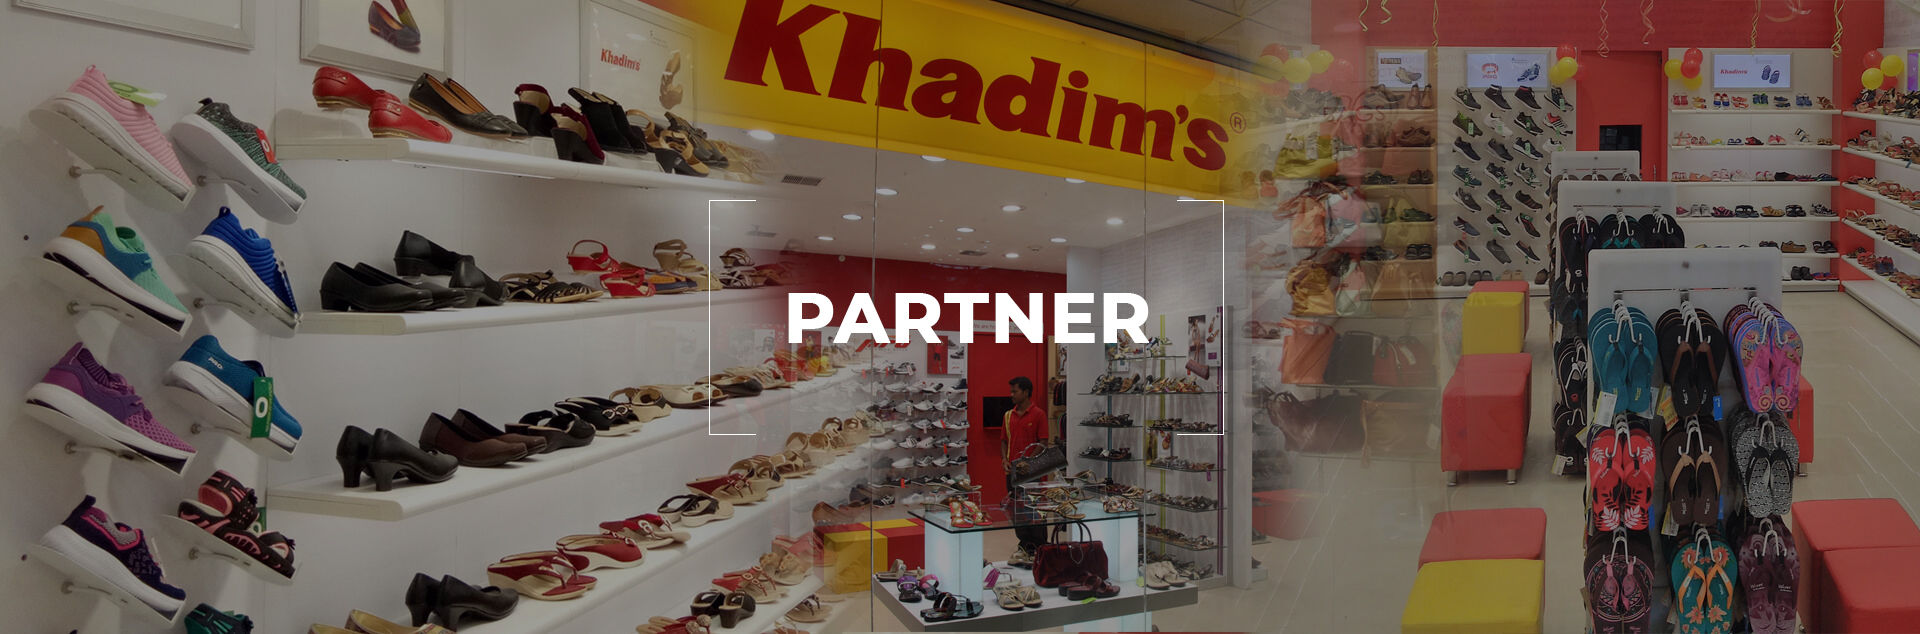 khadims online store